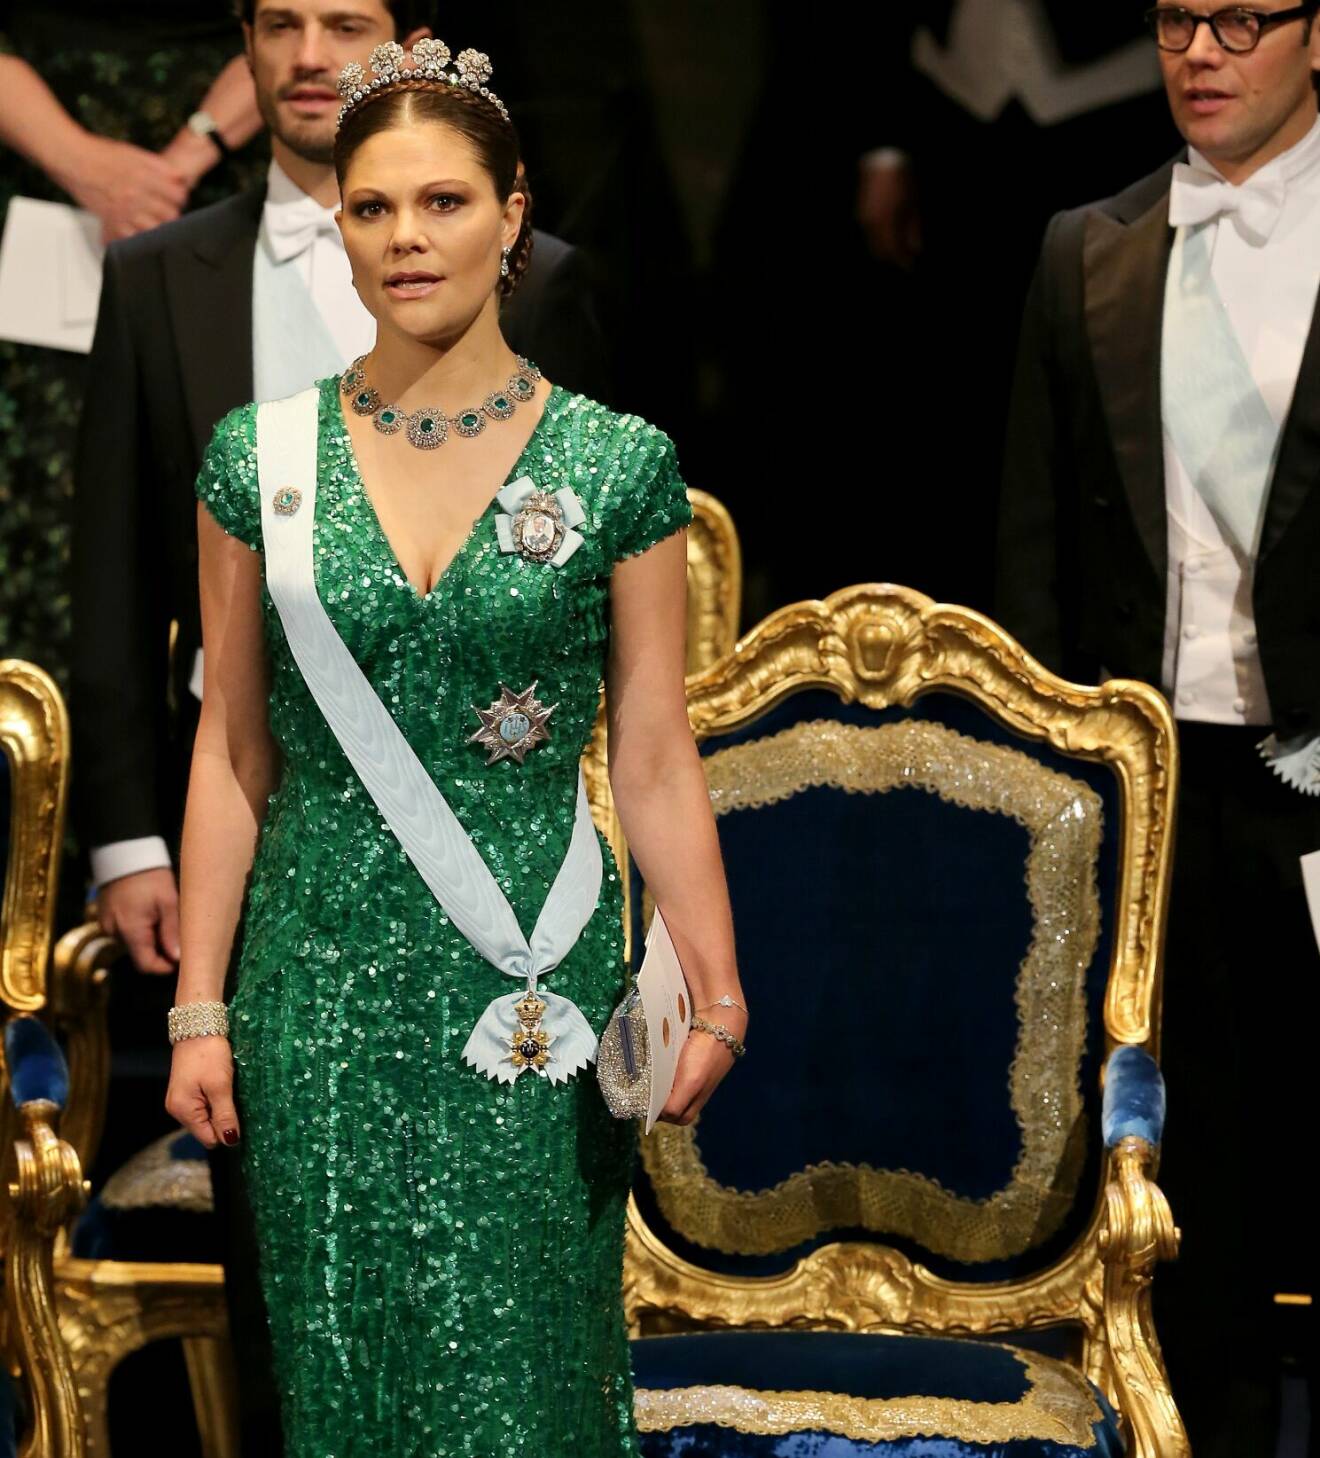 Kronprinsessan Victoria Nobel 2012